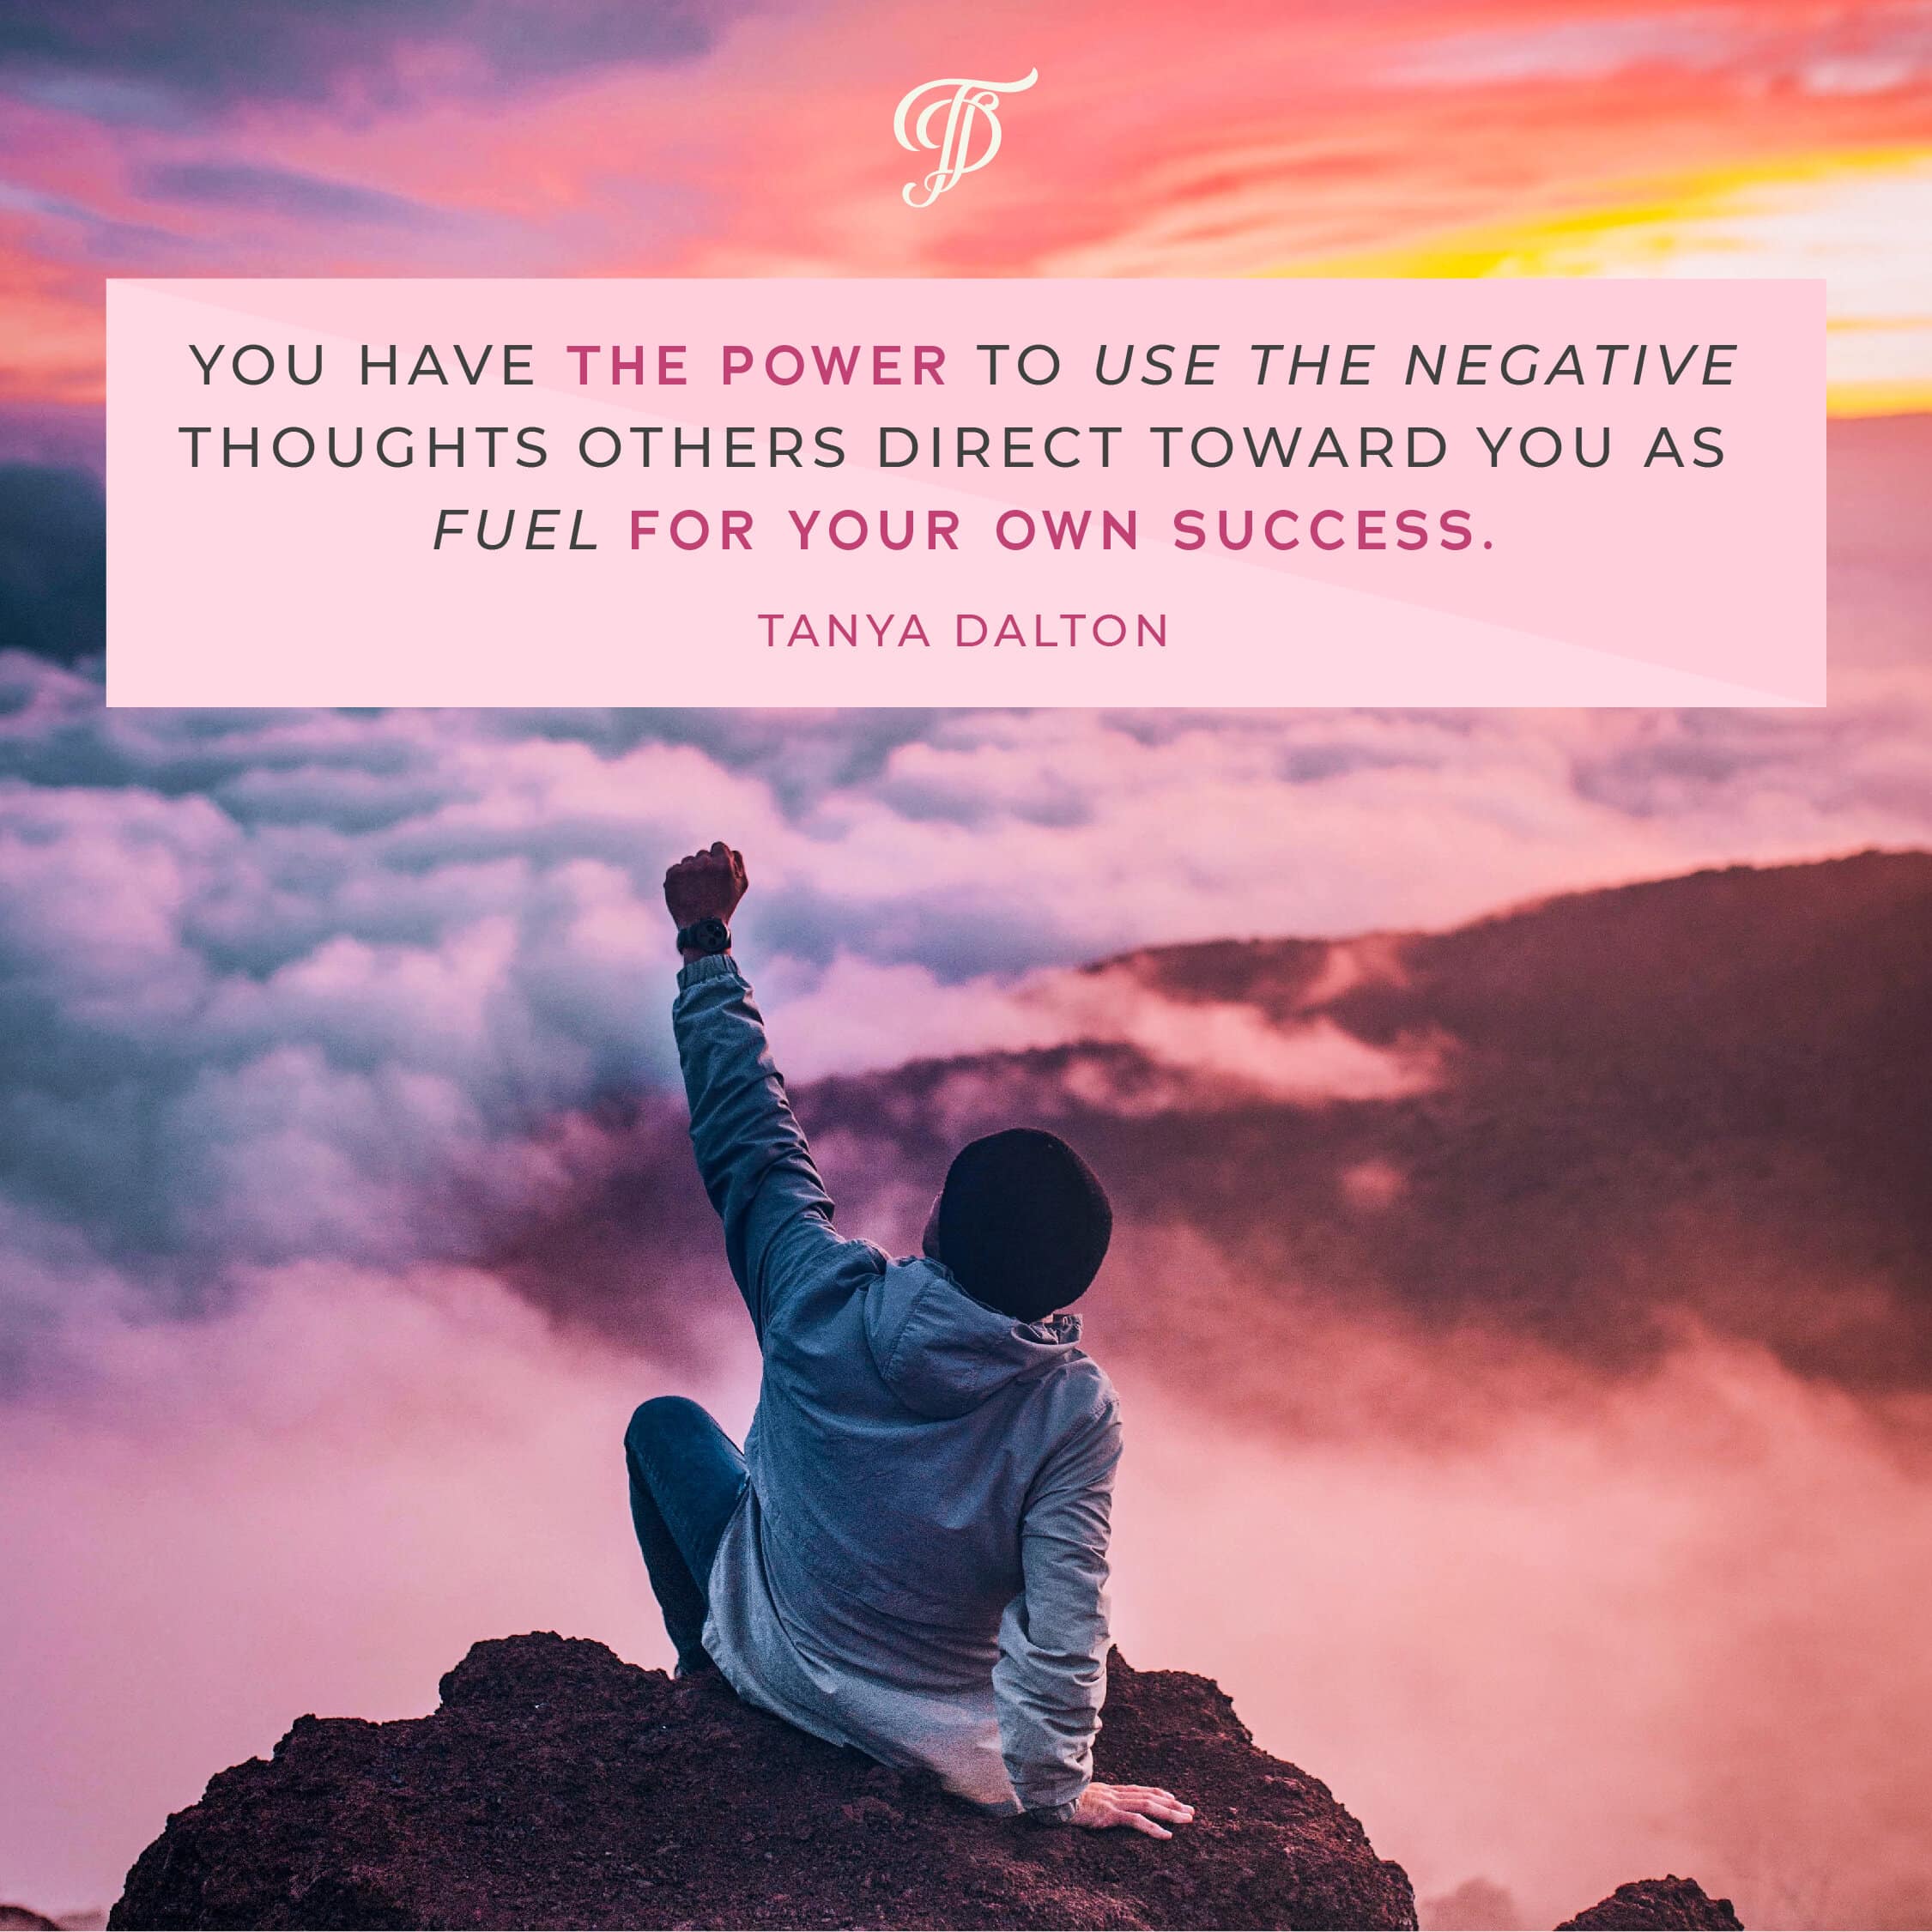 Tanya Dalton quote on negative thinking